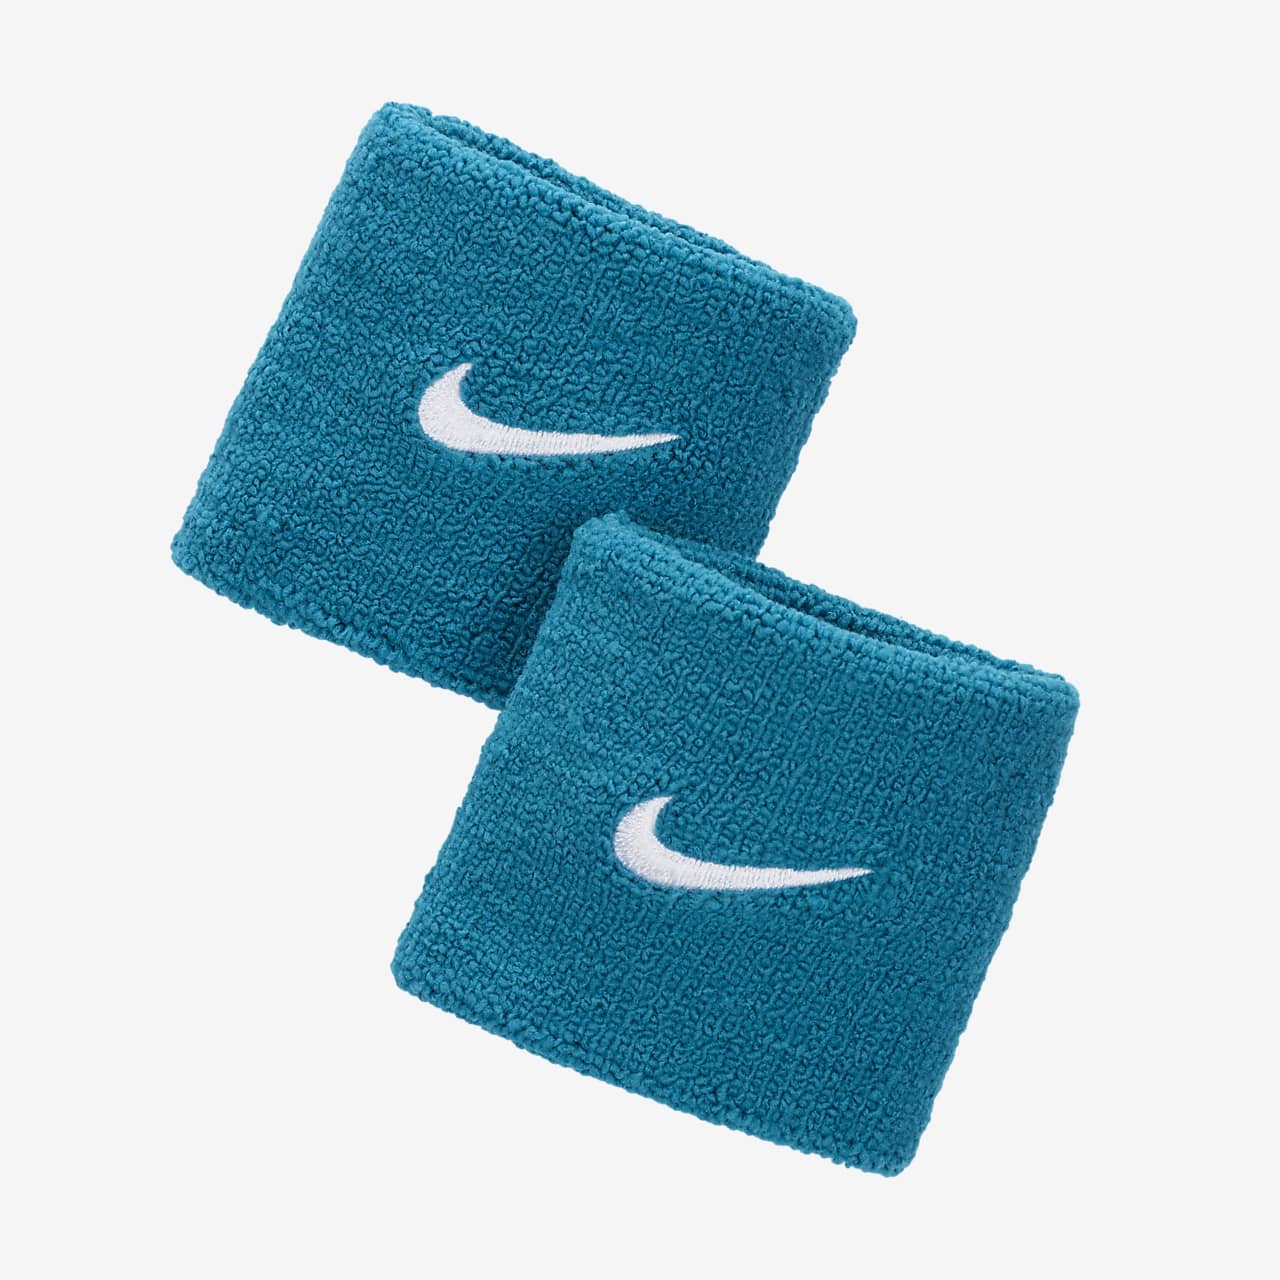 Unisex Adult and Kids Sports Nike Silicone Rubber Stretch Washable Bracelet  | eBay